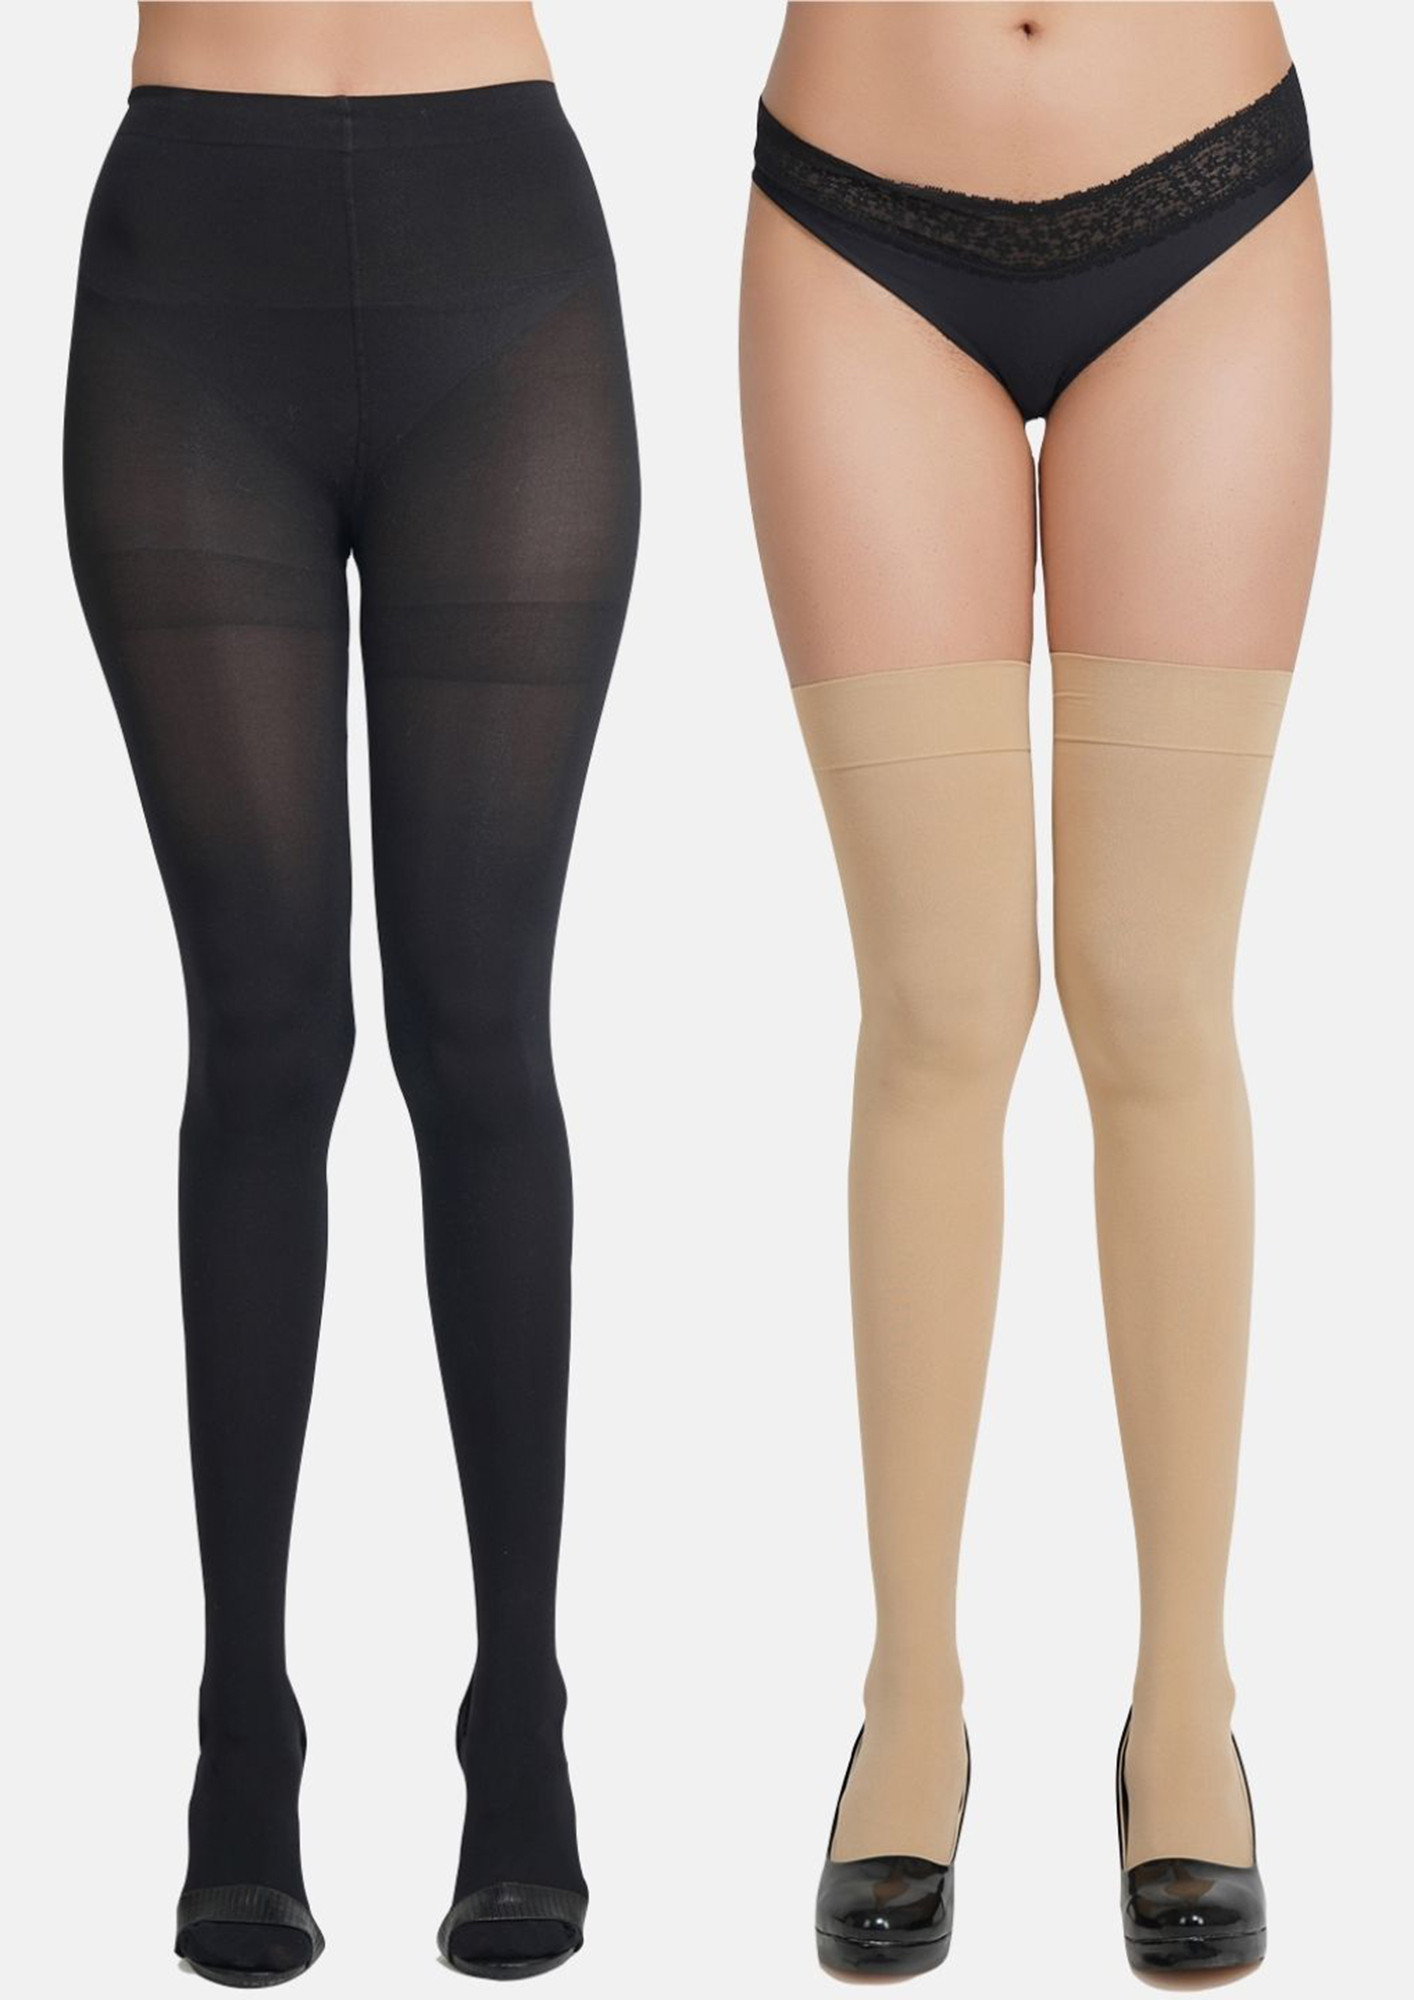 Buy NEXT2SKIN Women Nylon Opaque Pantyhose Stockings Combo